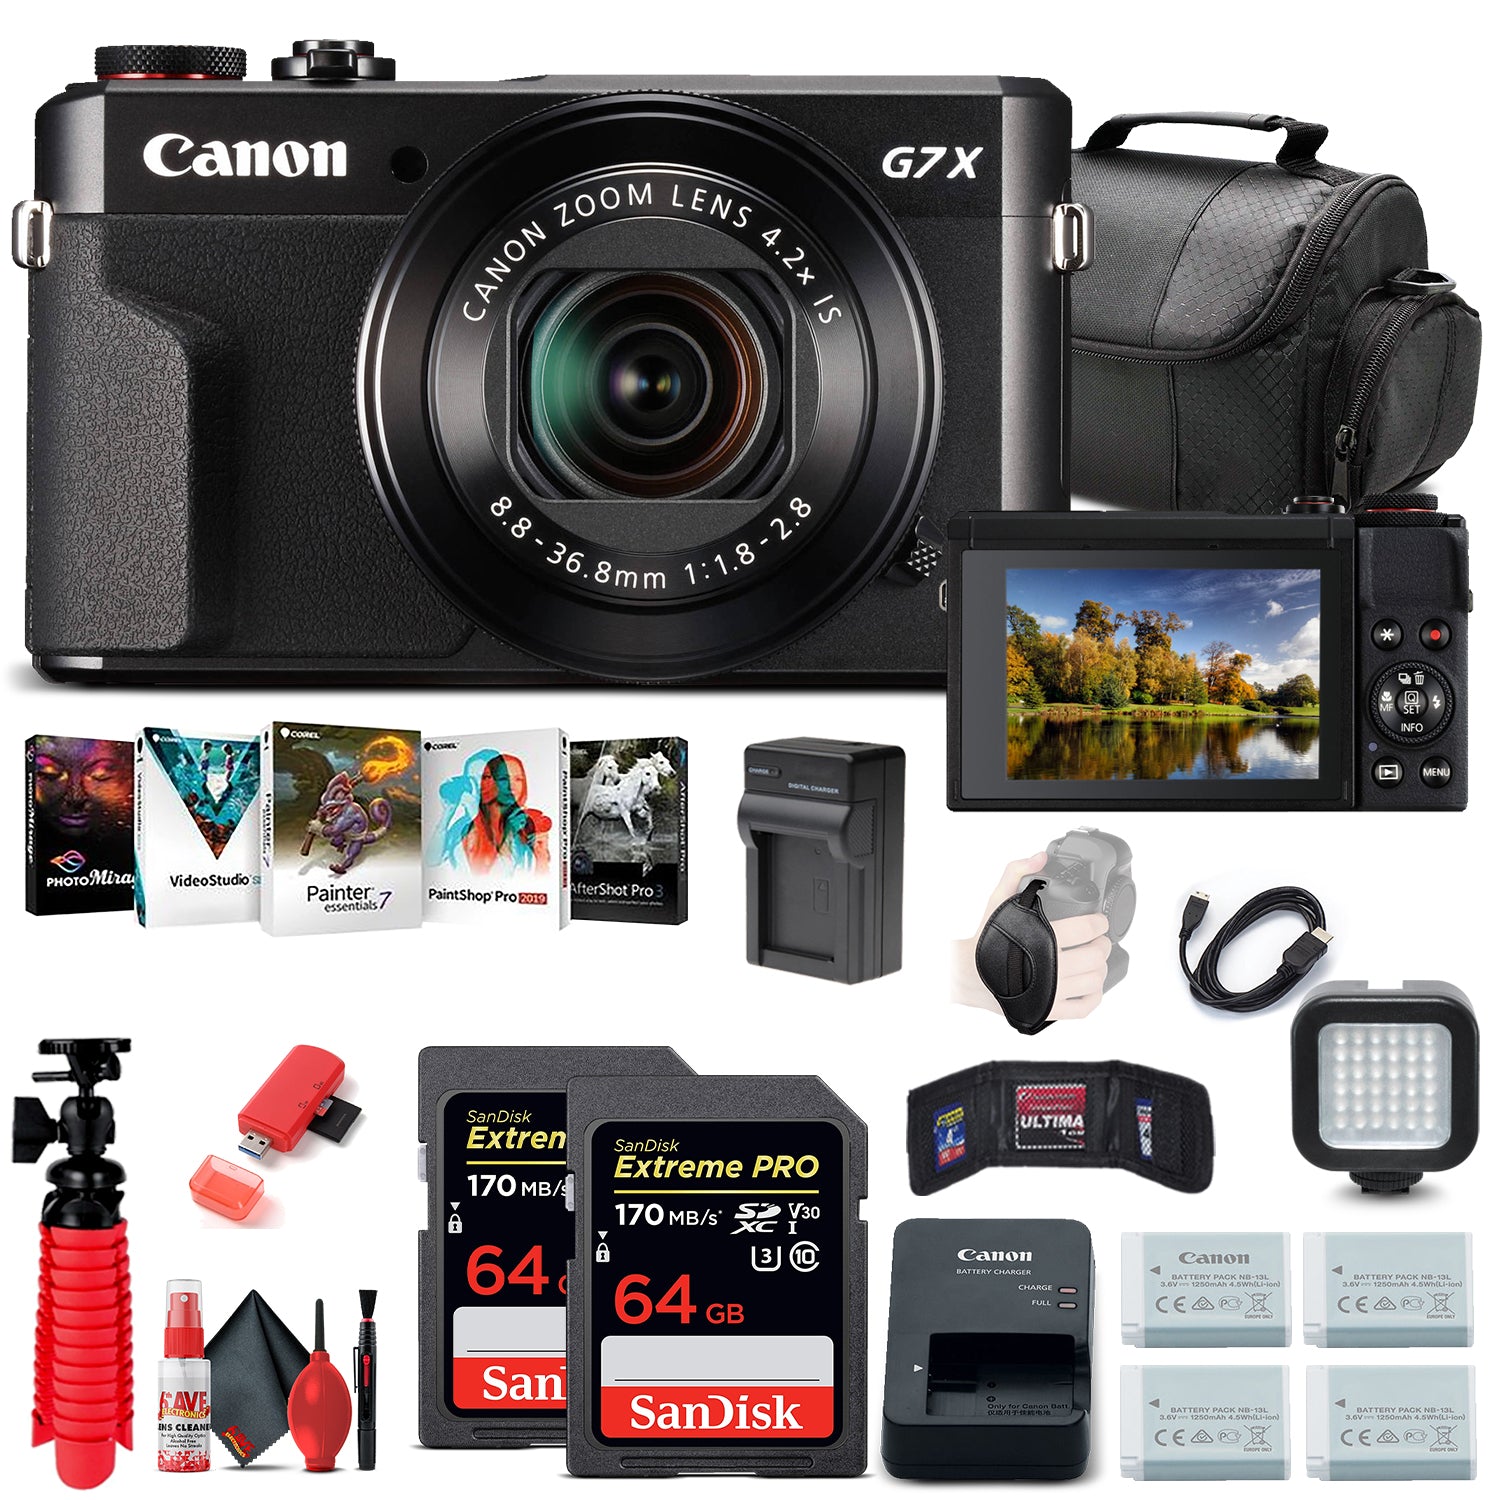 Canon PowerShot G7 X Mark II Digital Camera (1066C001) + 2 x 64GB Cards + More